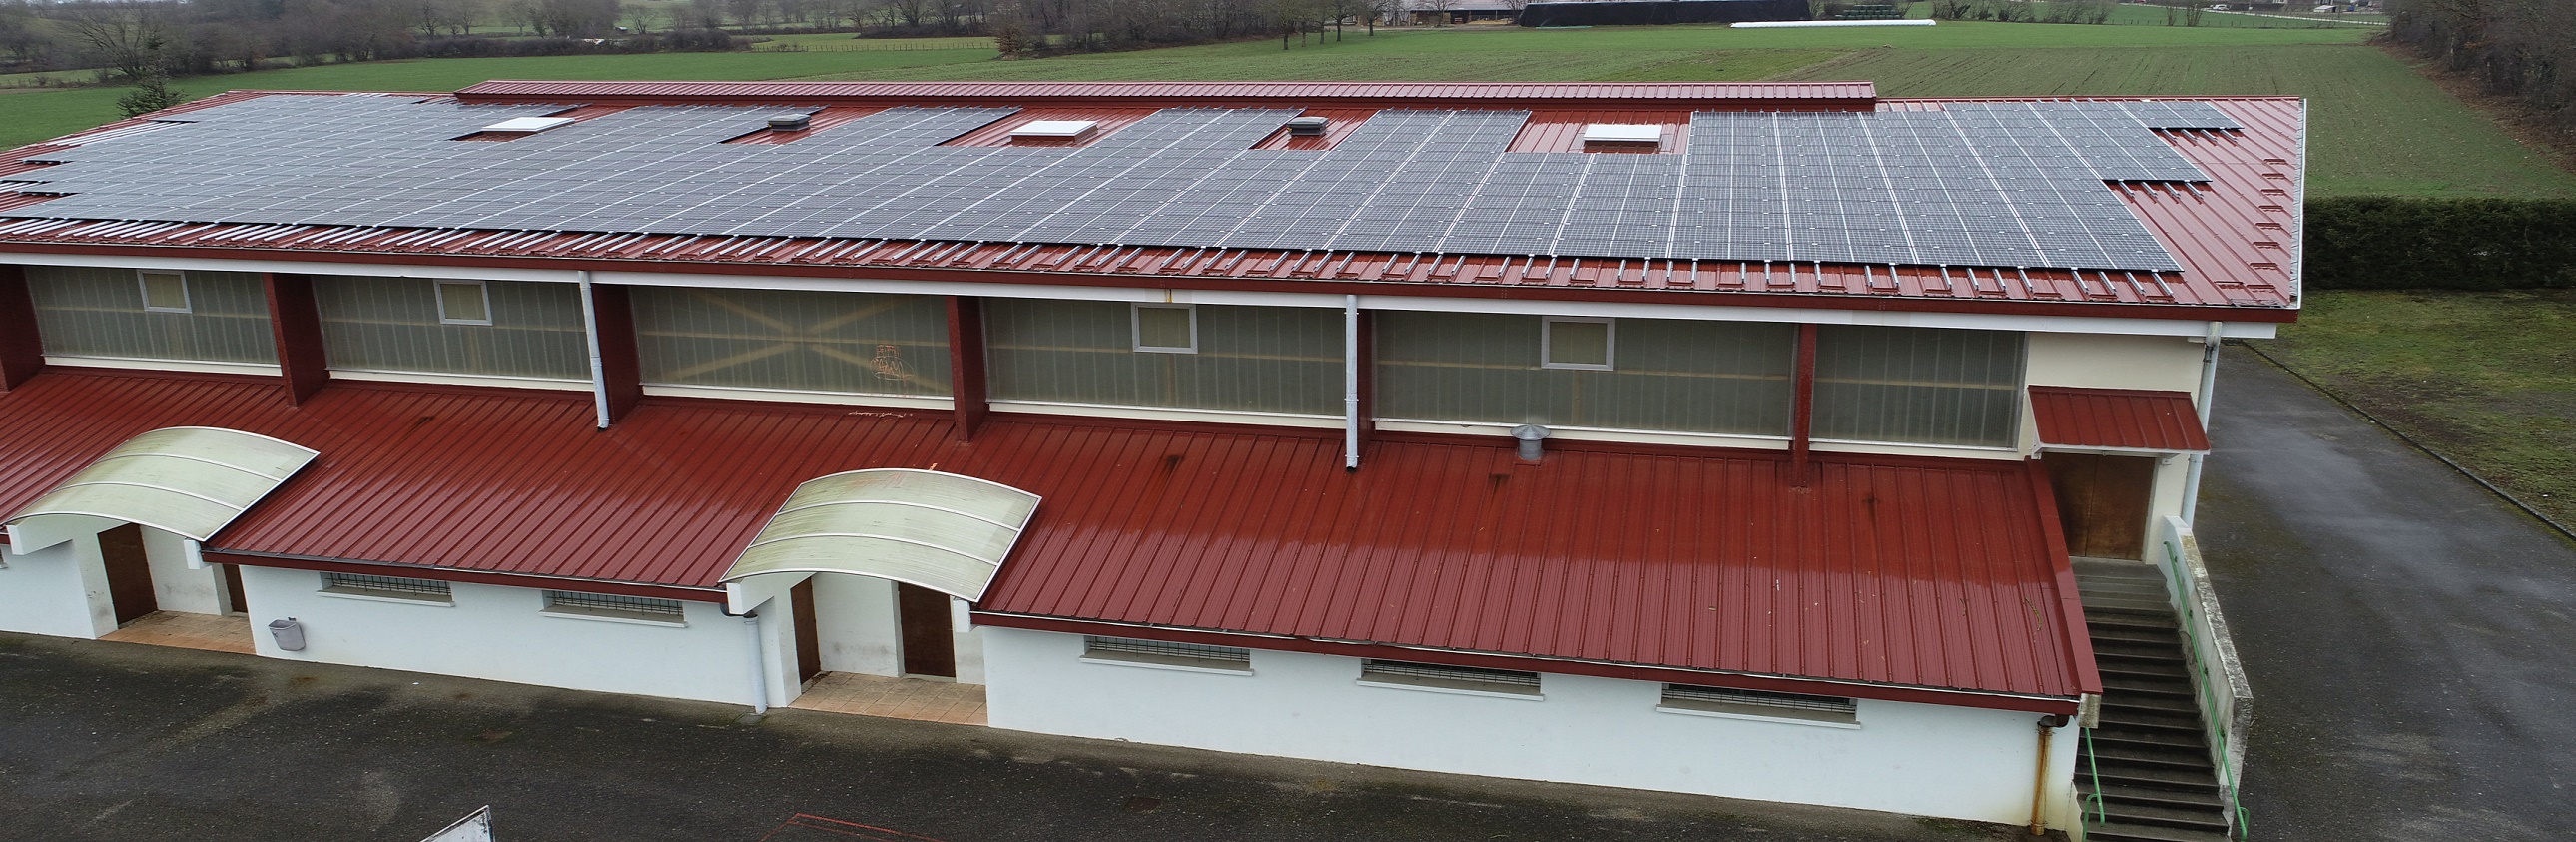 Centrale photovoltaïque gymnase d'Oyeu-Burcin